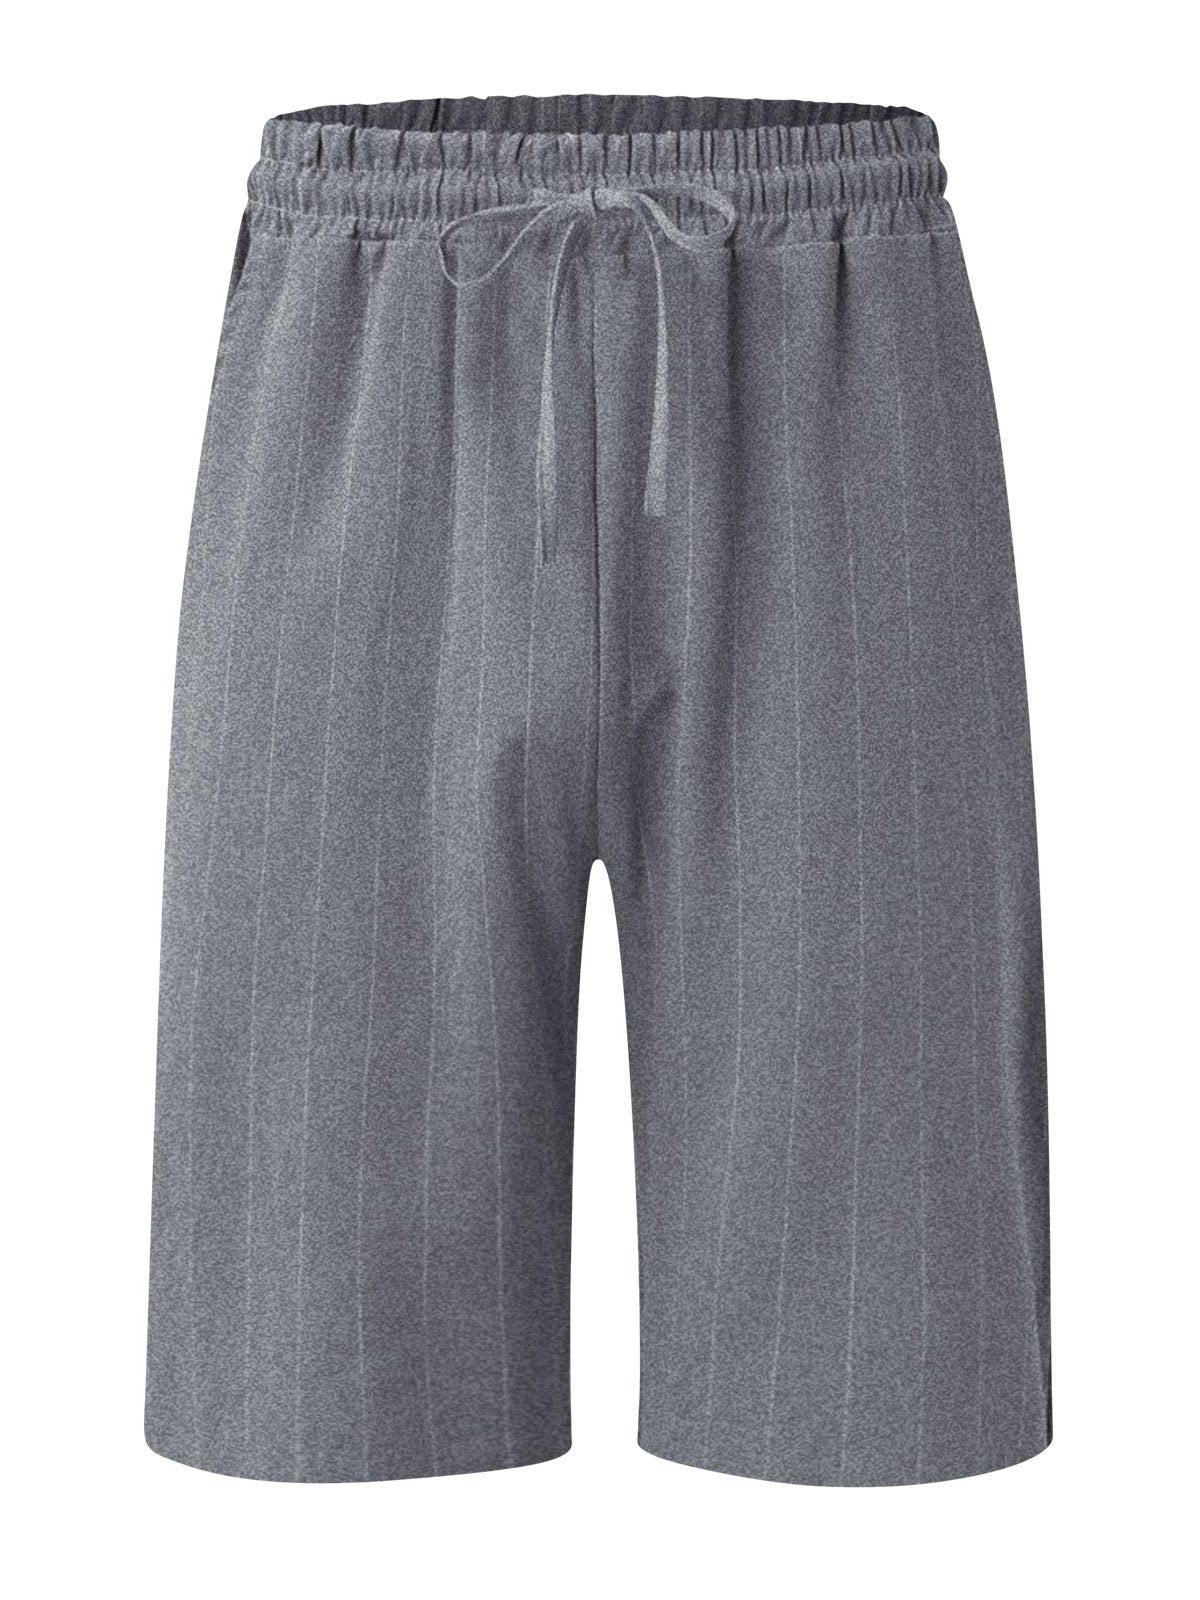 Men's Elastic Waist Striped Cotton Linen Casual Basic Pocket Shorts